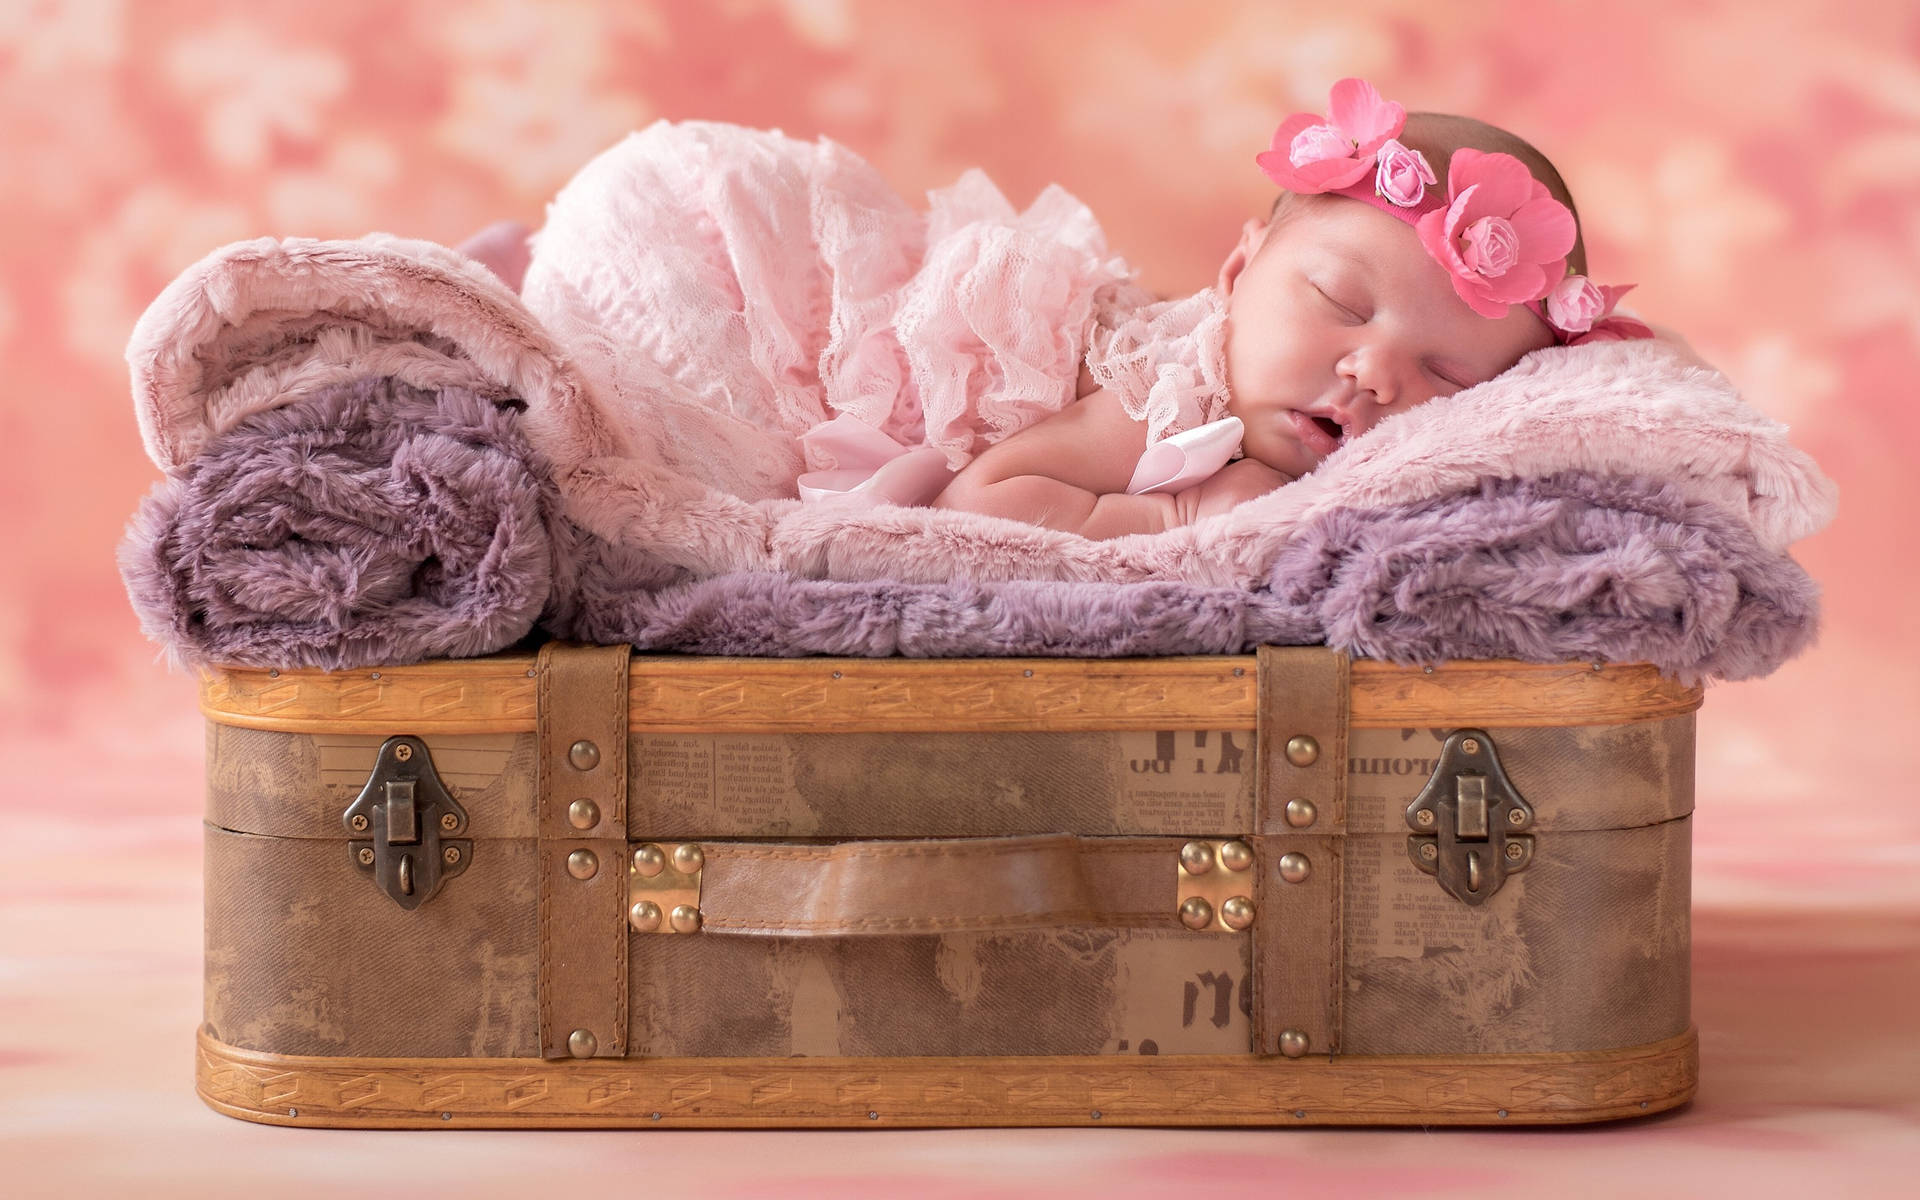 Sleeping Cute Baby Girl Wallpaper